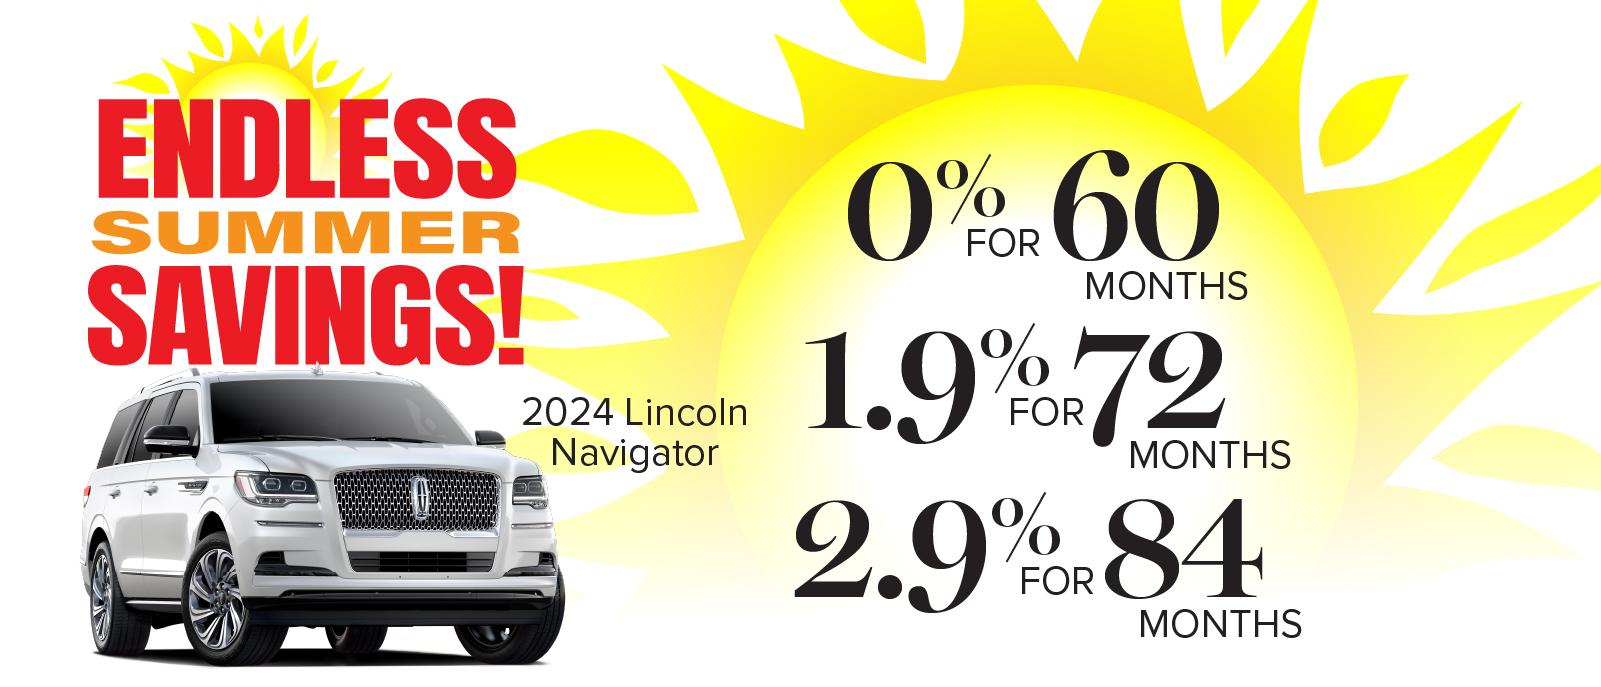 Shop 2.9% for 84 Months on 2024 Lincoln Navigator!🔥